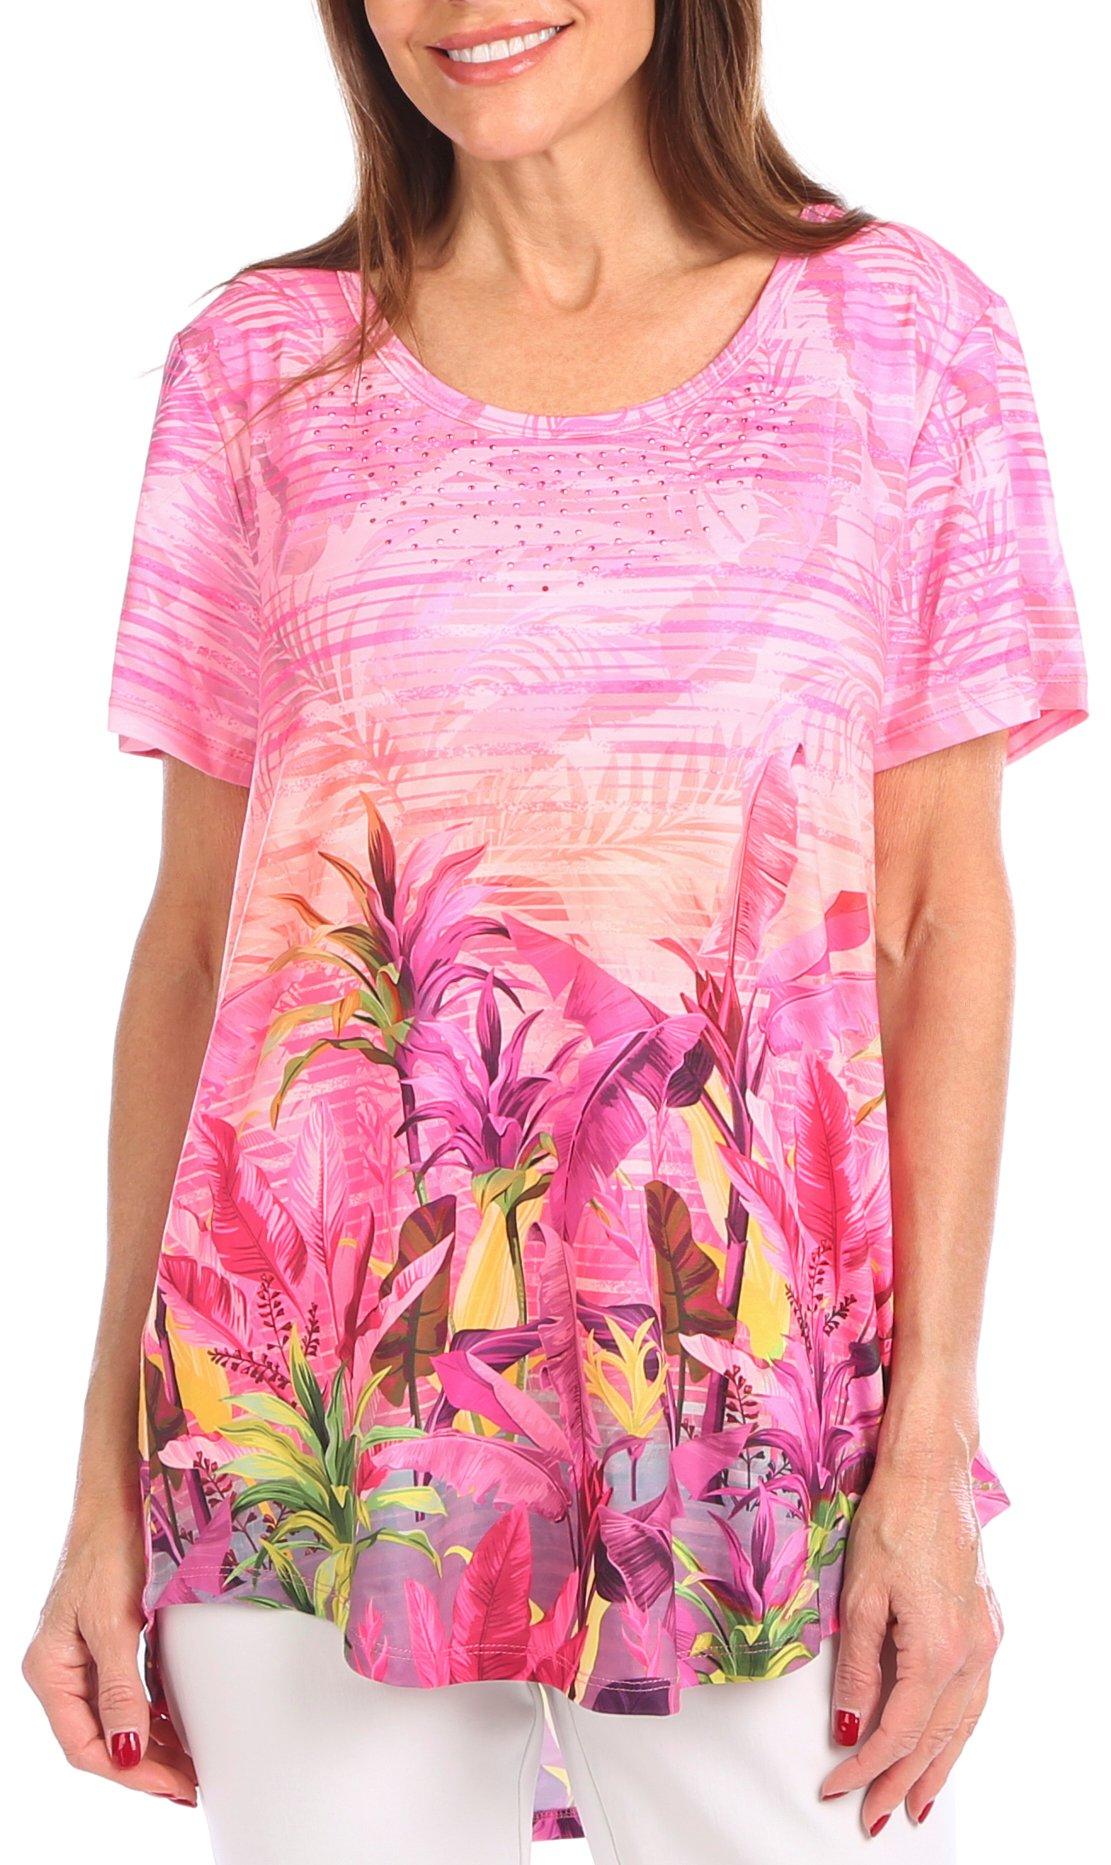 Womens Tropical Embellished Print Short Sleeve Top